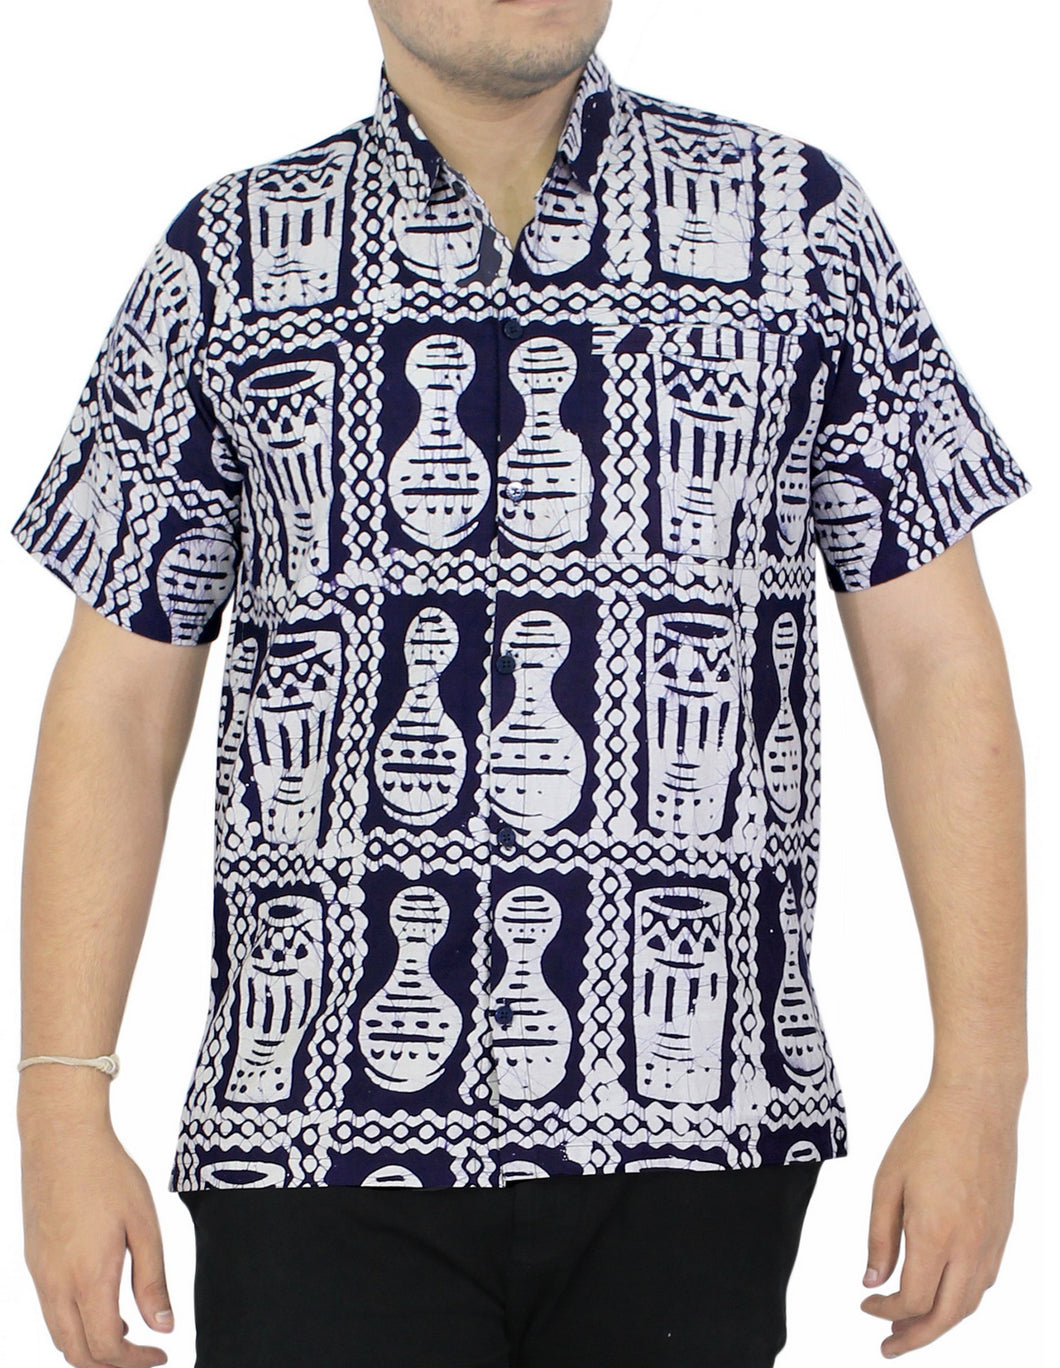 la-leela-mens-relaxed-casual-beach-hawaiian-shirt-aloha-tropical-beach-front-pocket-short-sleeve-navy-blue